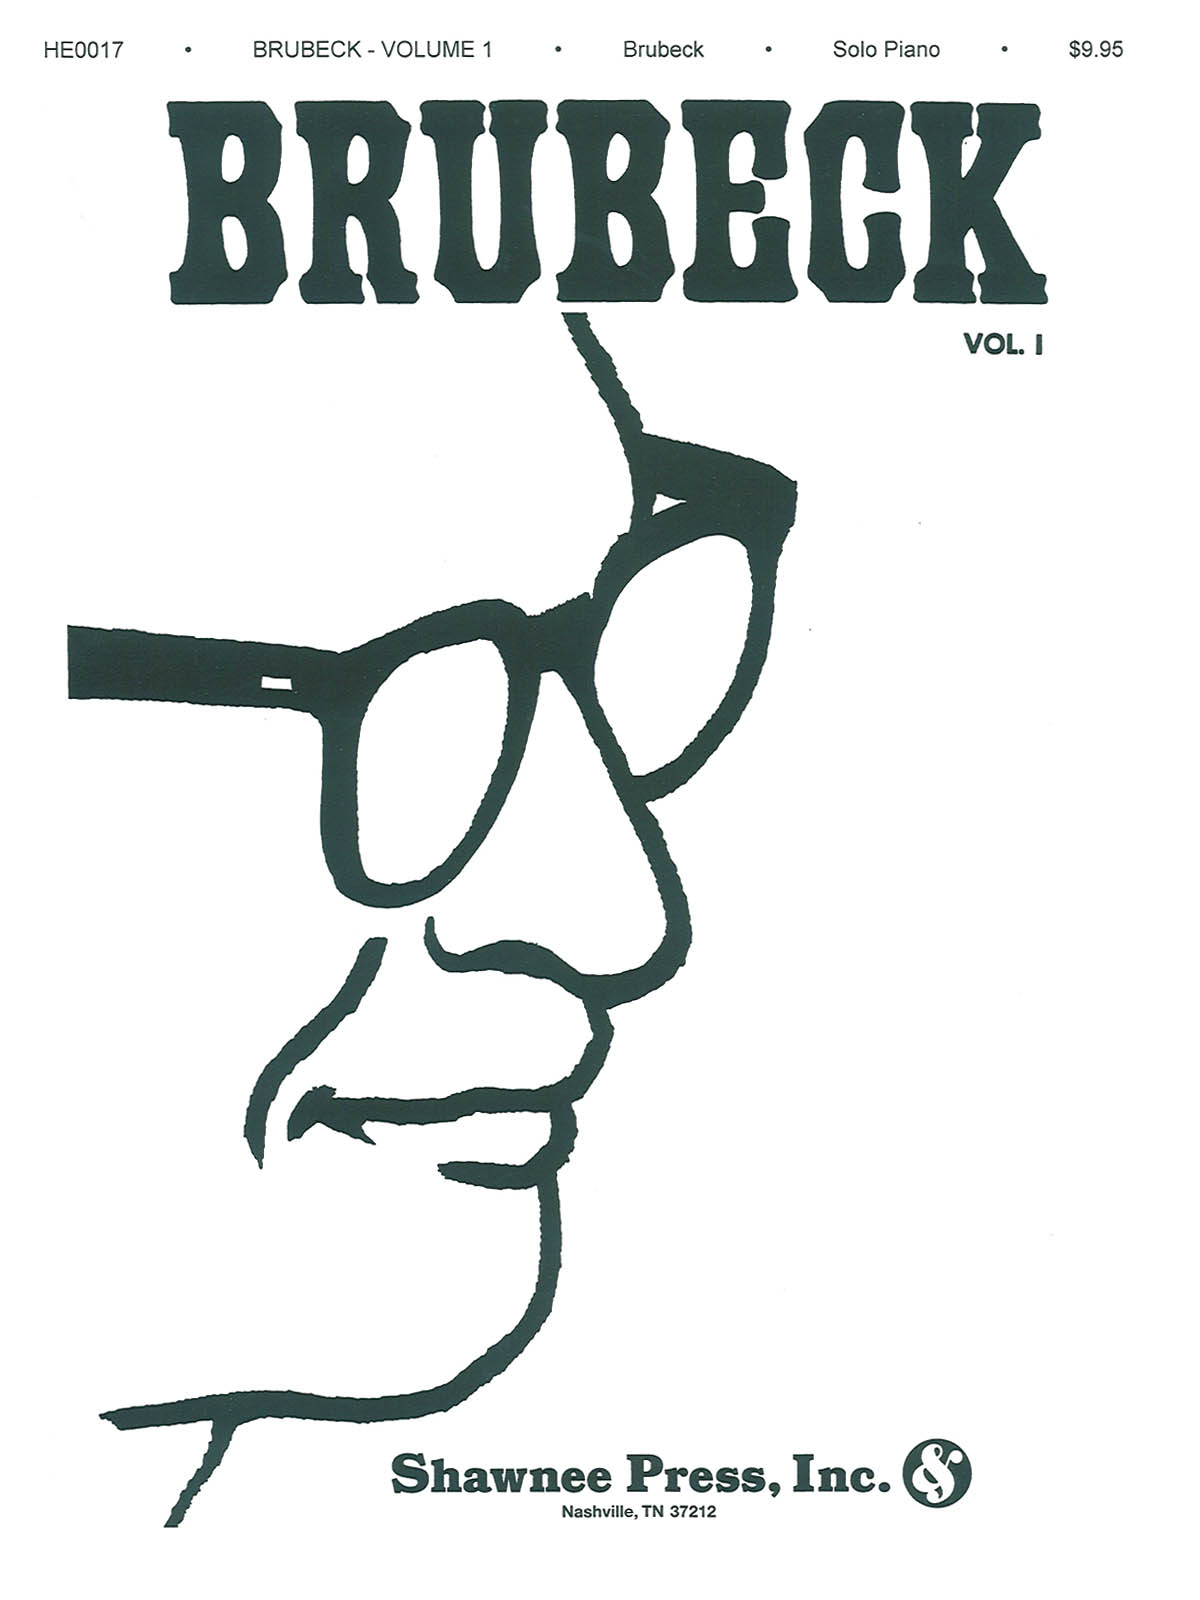 Dave Brubeck – Volume 1